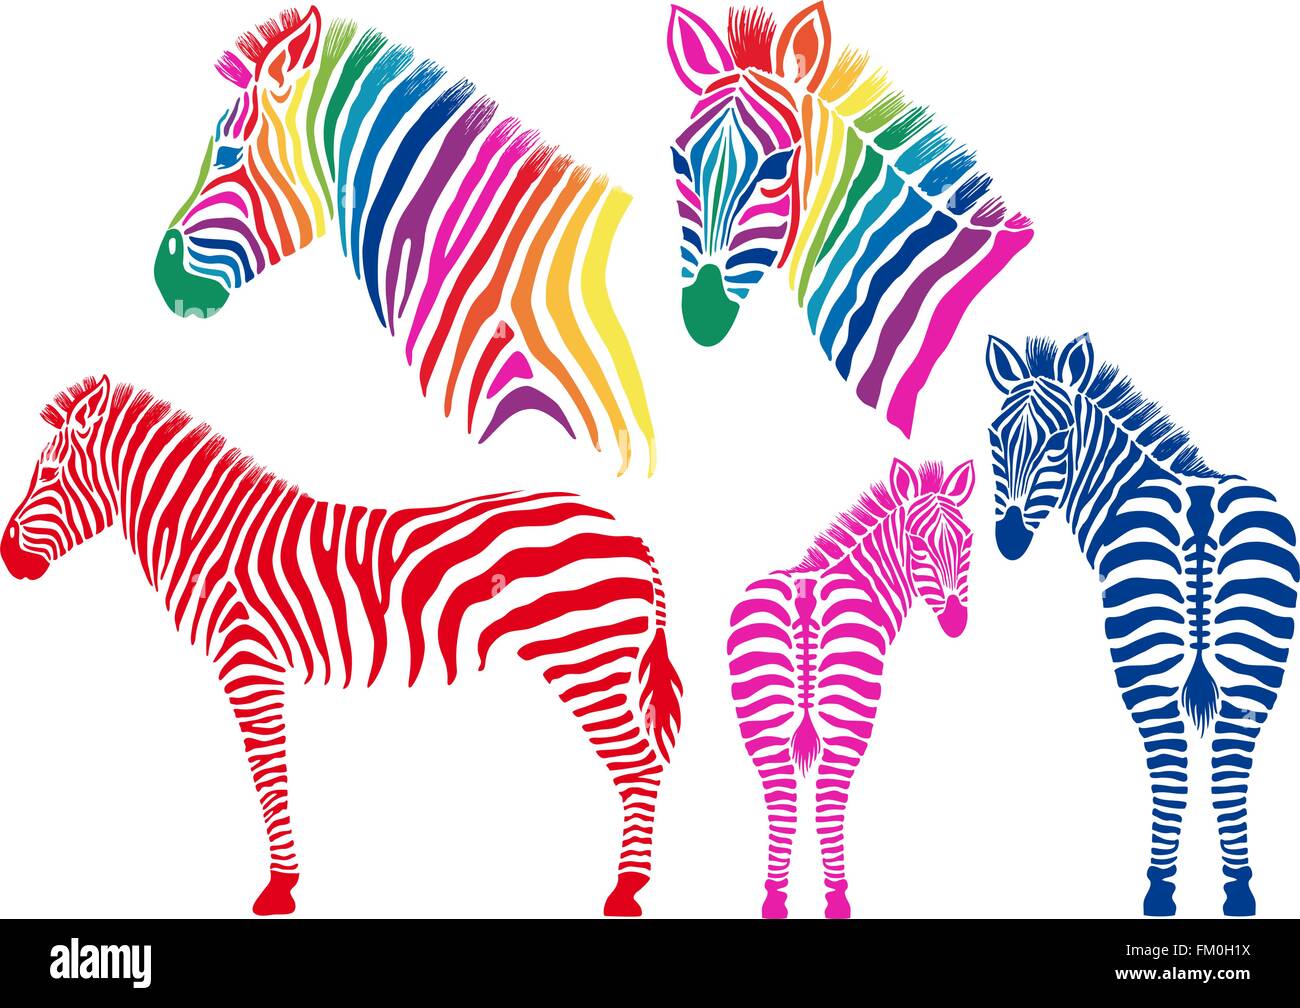 Zebra vector vectors hi-res stock photography and images - Alamy